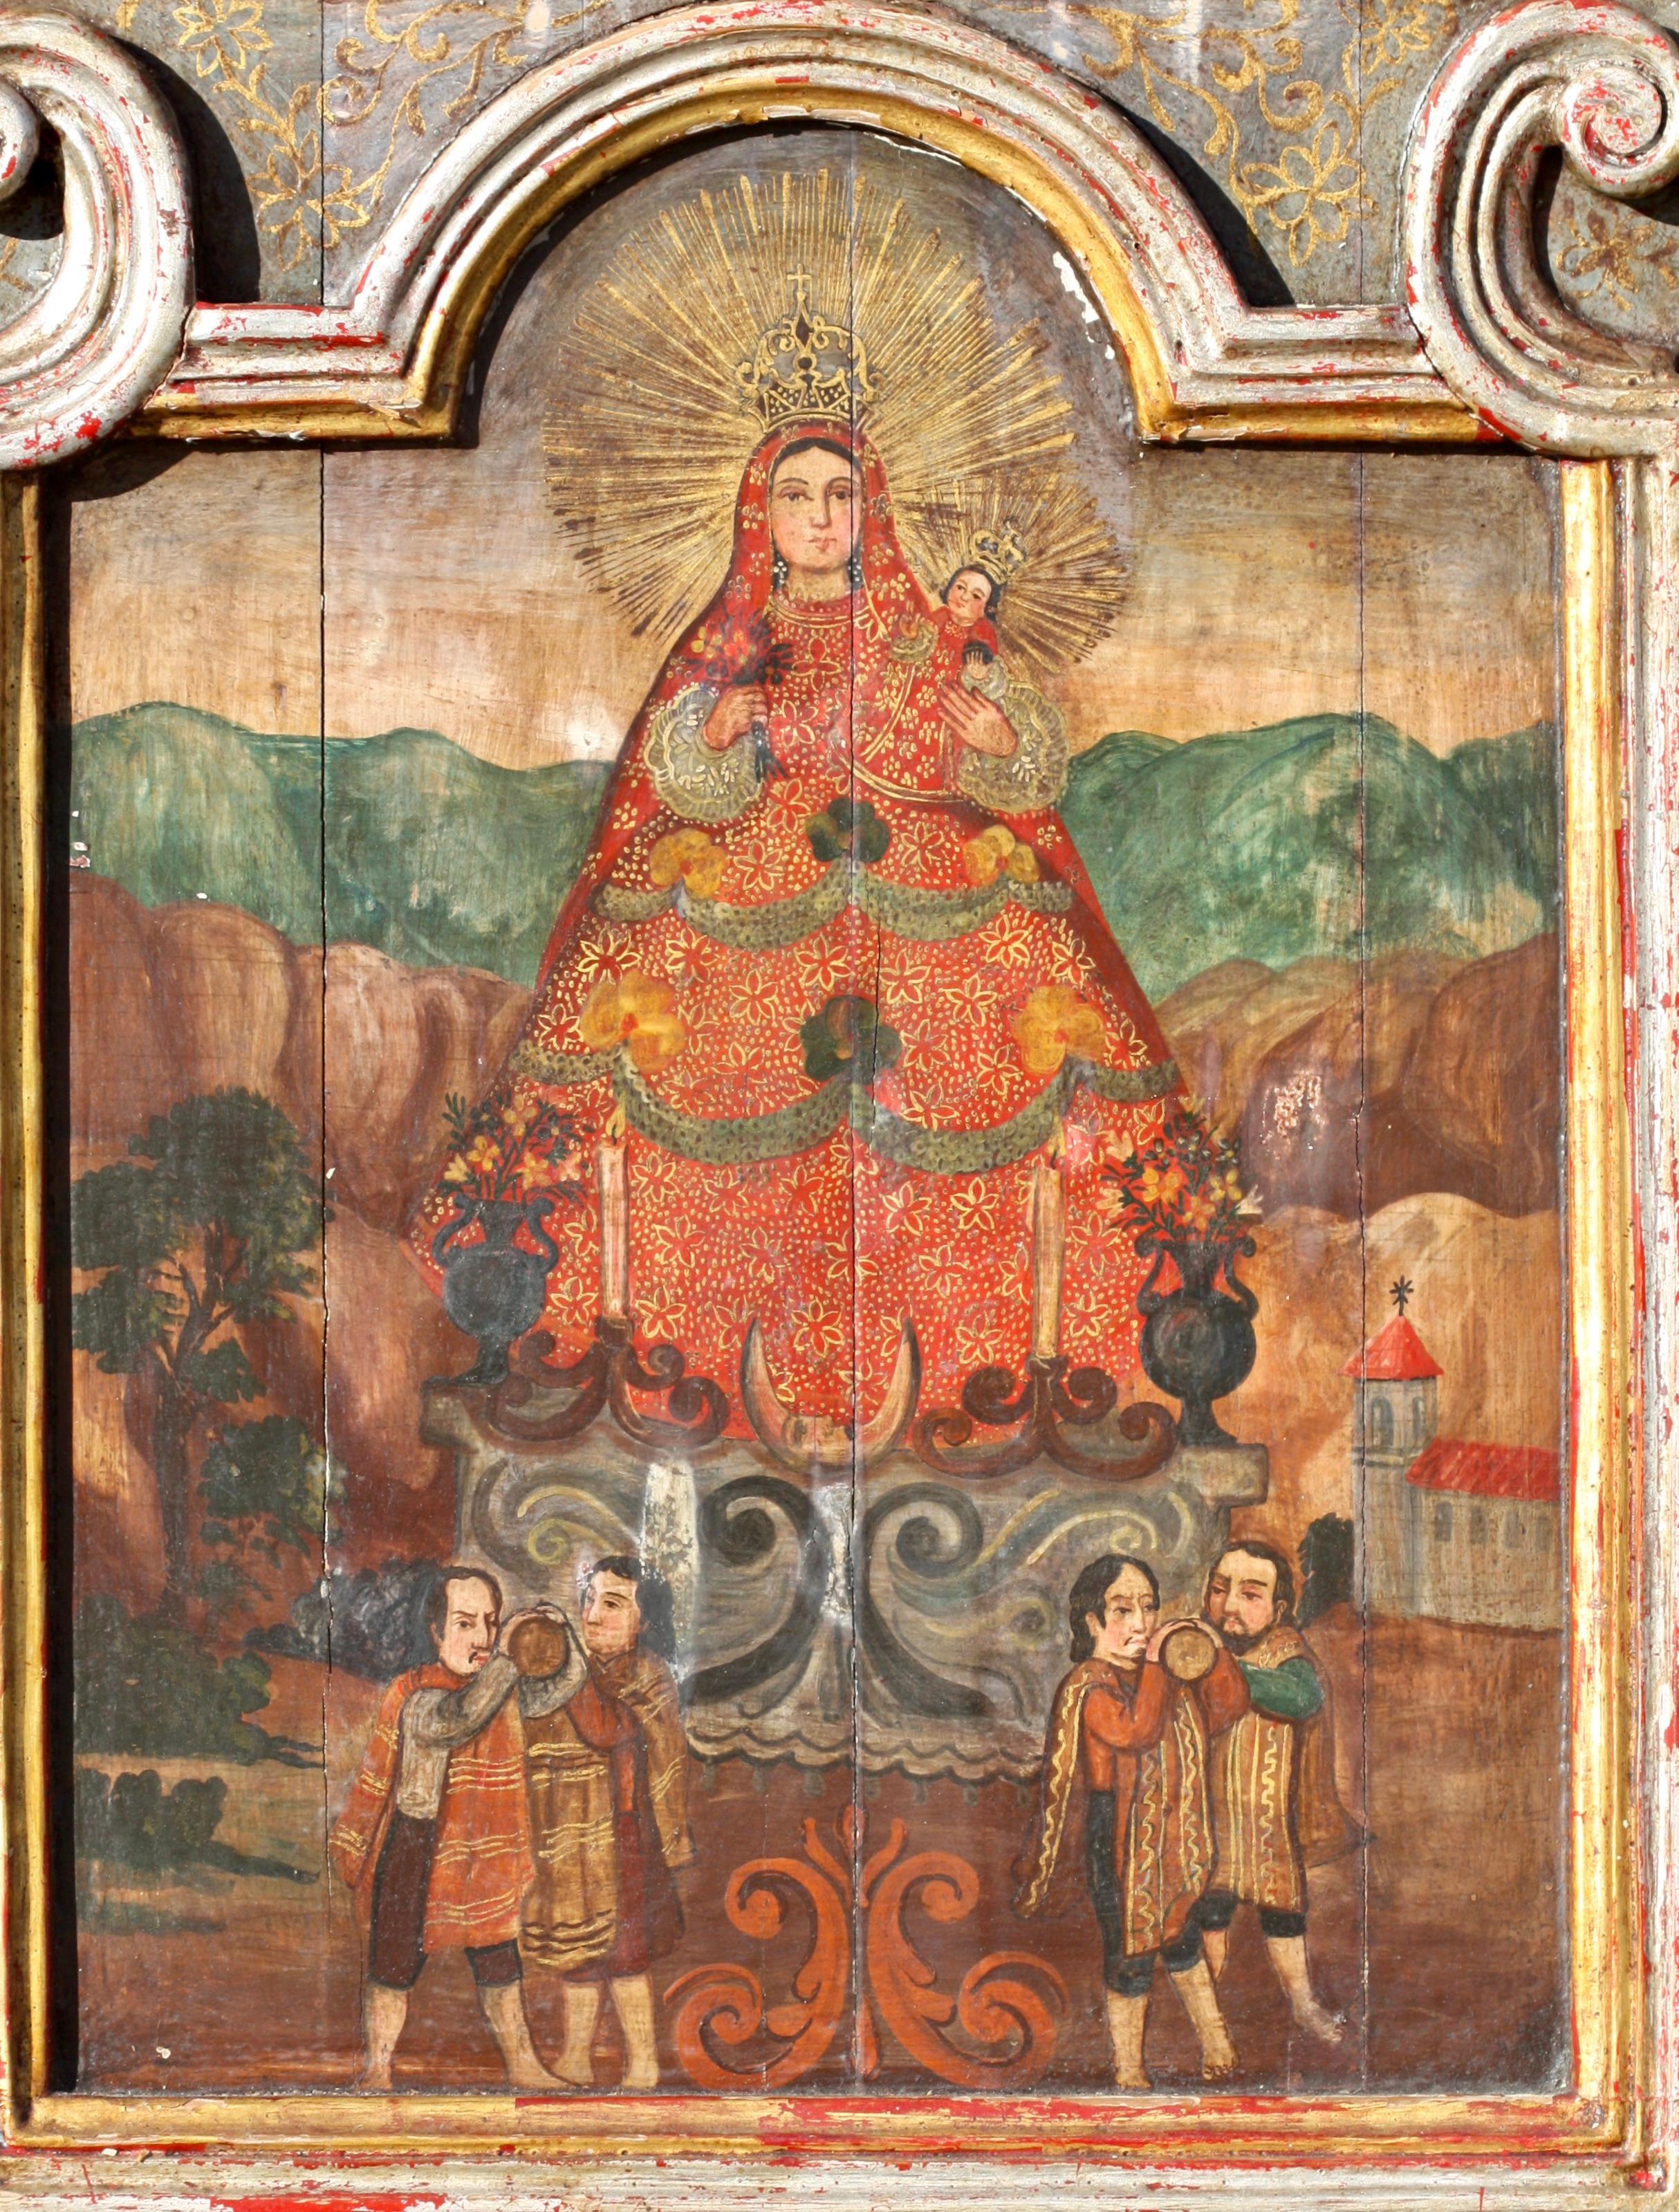 After Cristóbal De Hernández Quintana (1651-1725)
La Virgen de los Remedios de la Laguna, Tenerife
Painting
Oil/panel
Measures: Framed: Height 37.5 in. (95.25 cm.), width 23 in. (58.42 cm.)
Without frame: Height 22.25 in. (56.51 cm.), width 17